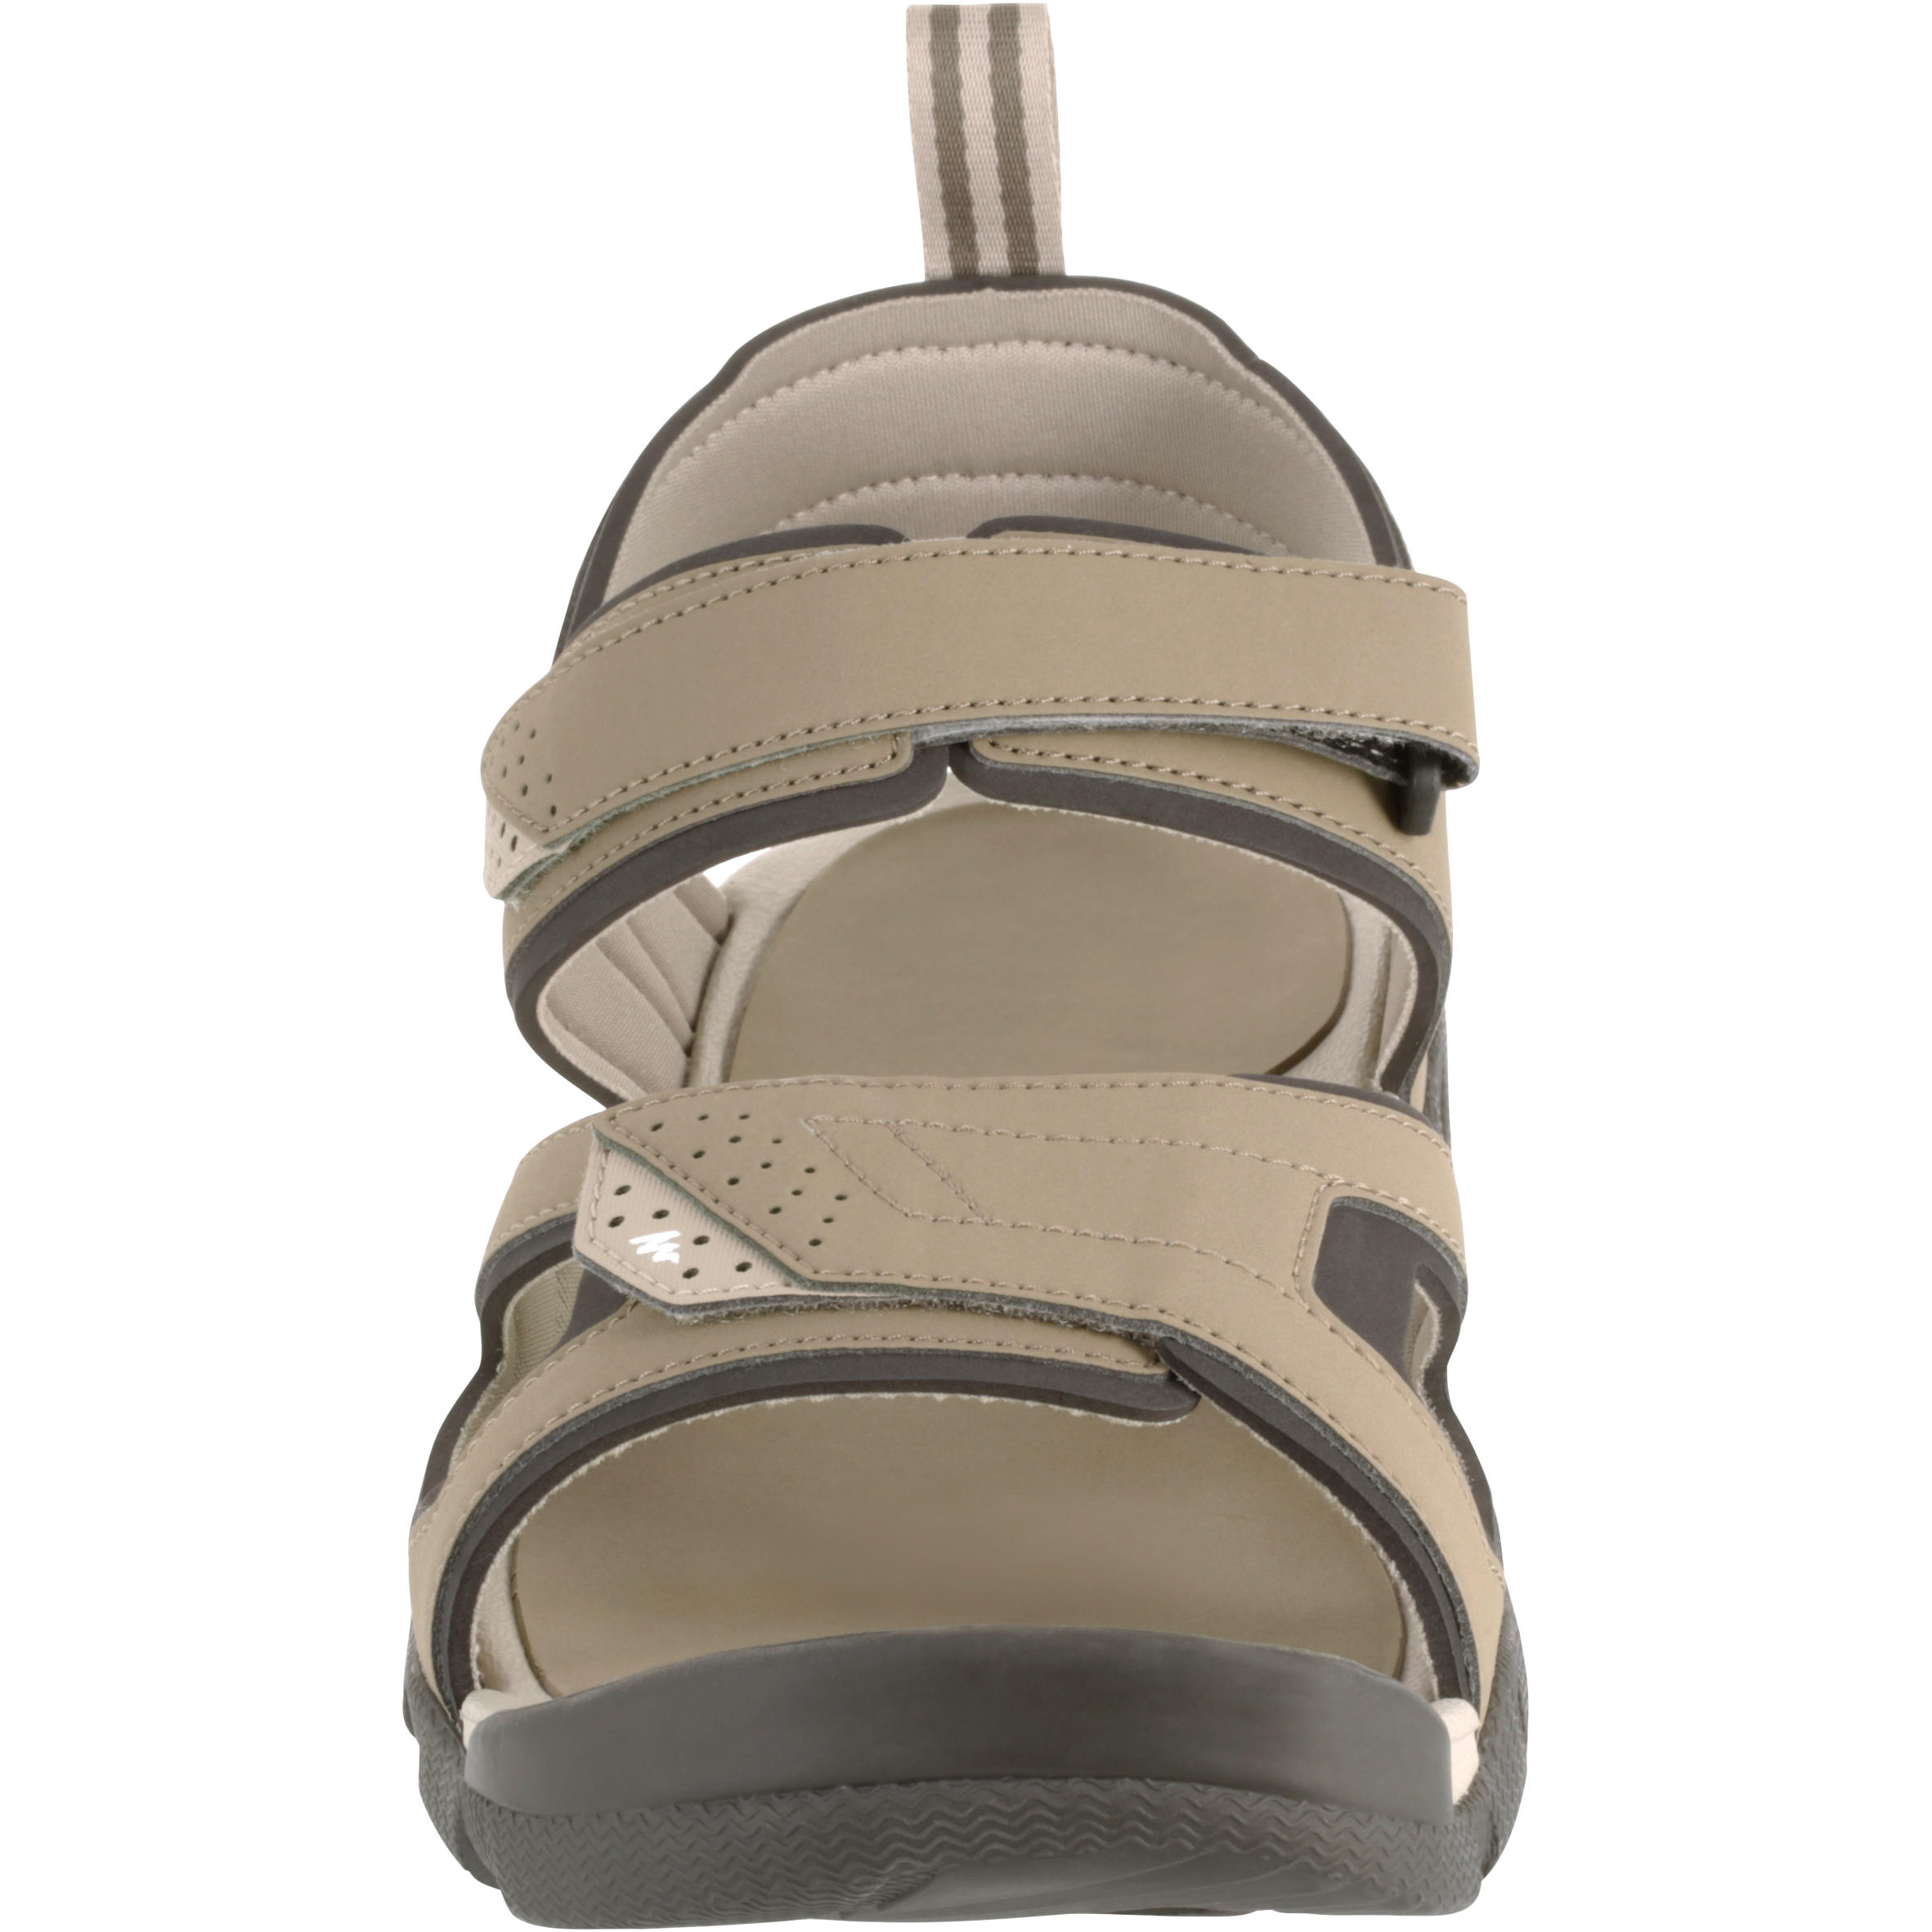 Kids' Walking Sandals - JR size 12.5 to 4 - Blue/Pink - Decathlon